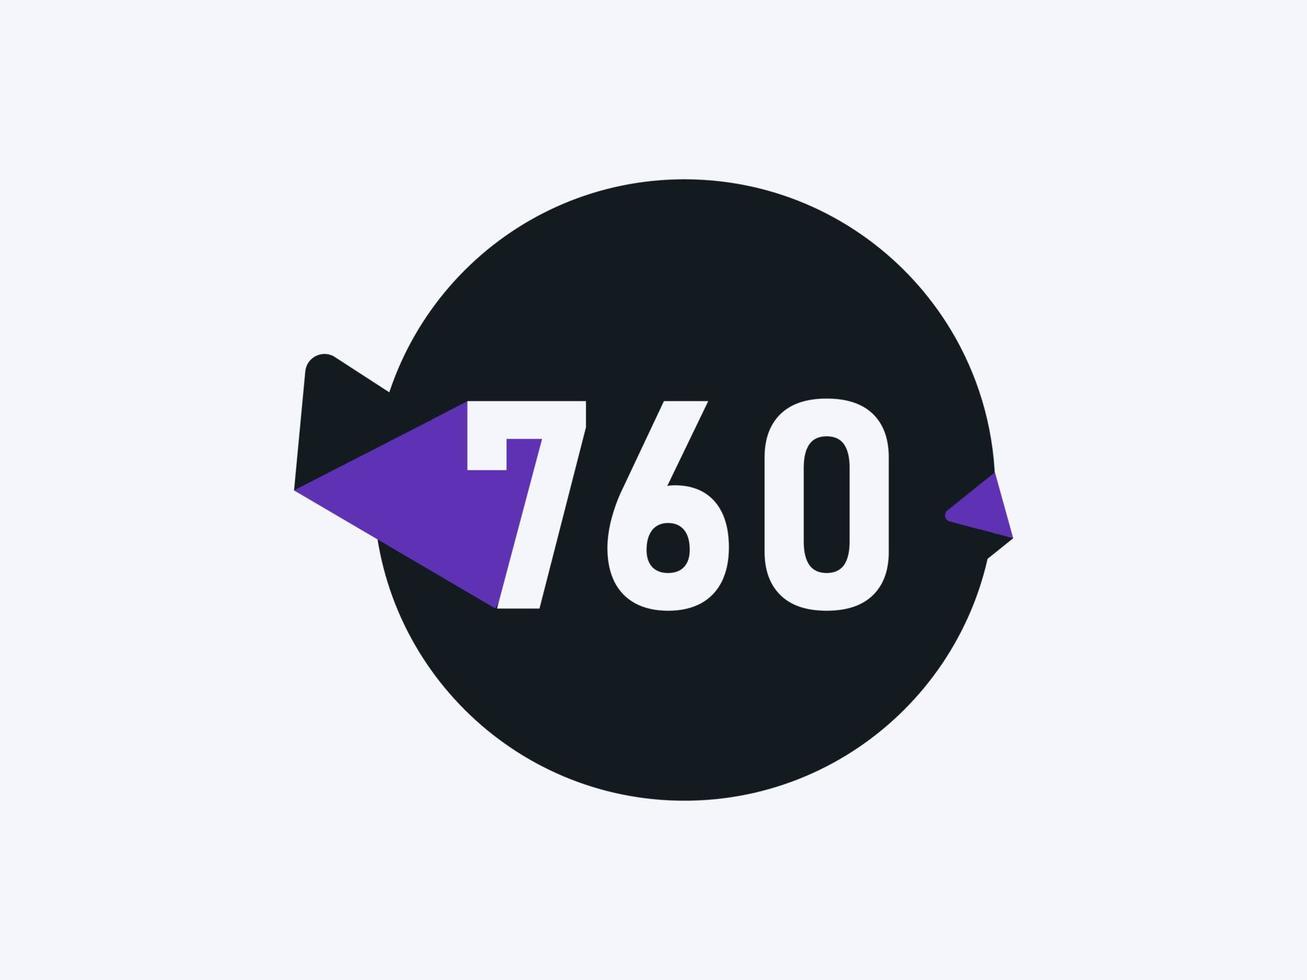 760 Number logo icon design vector image. Number logo icon design vector image